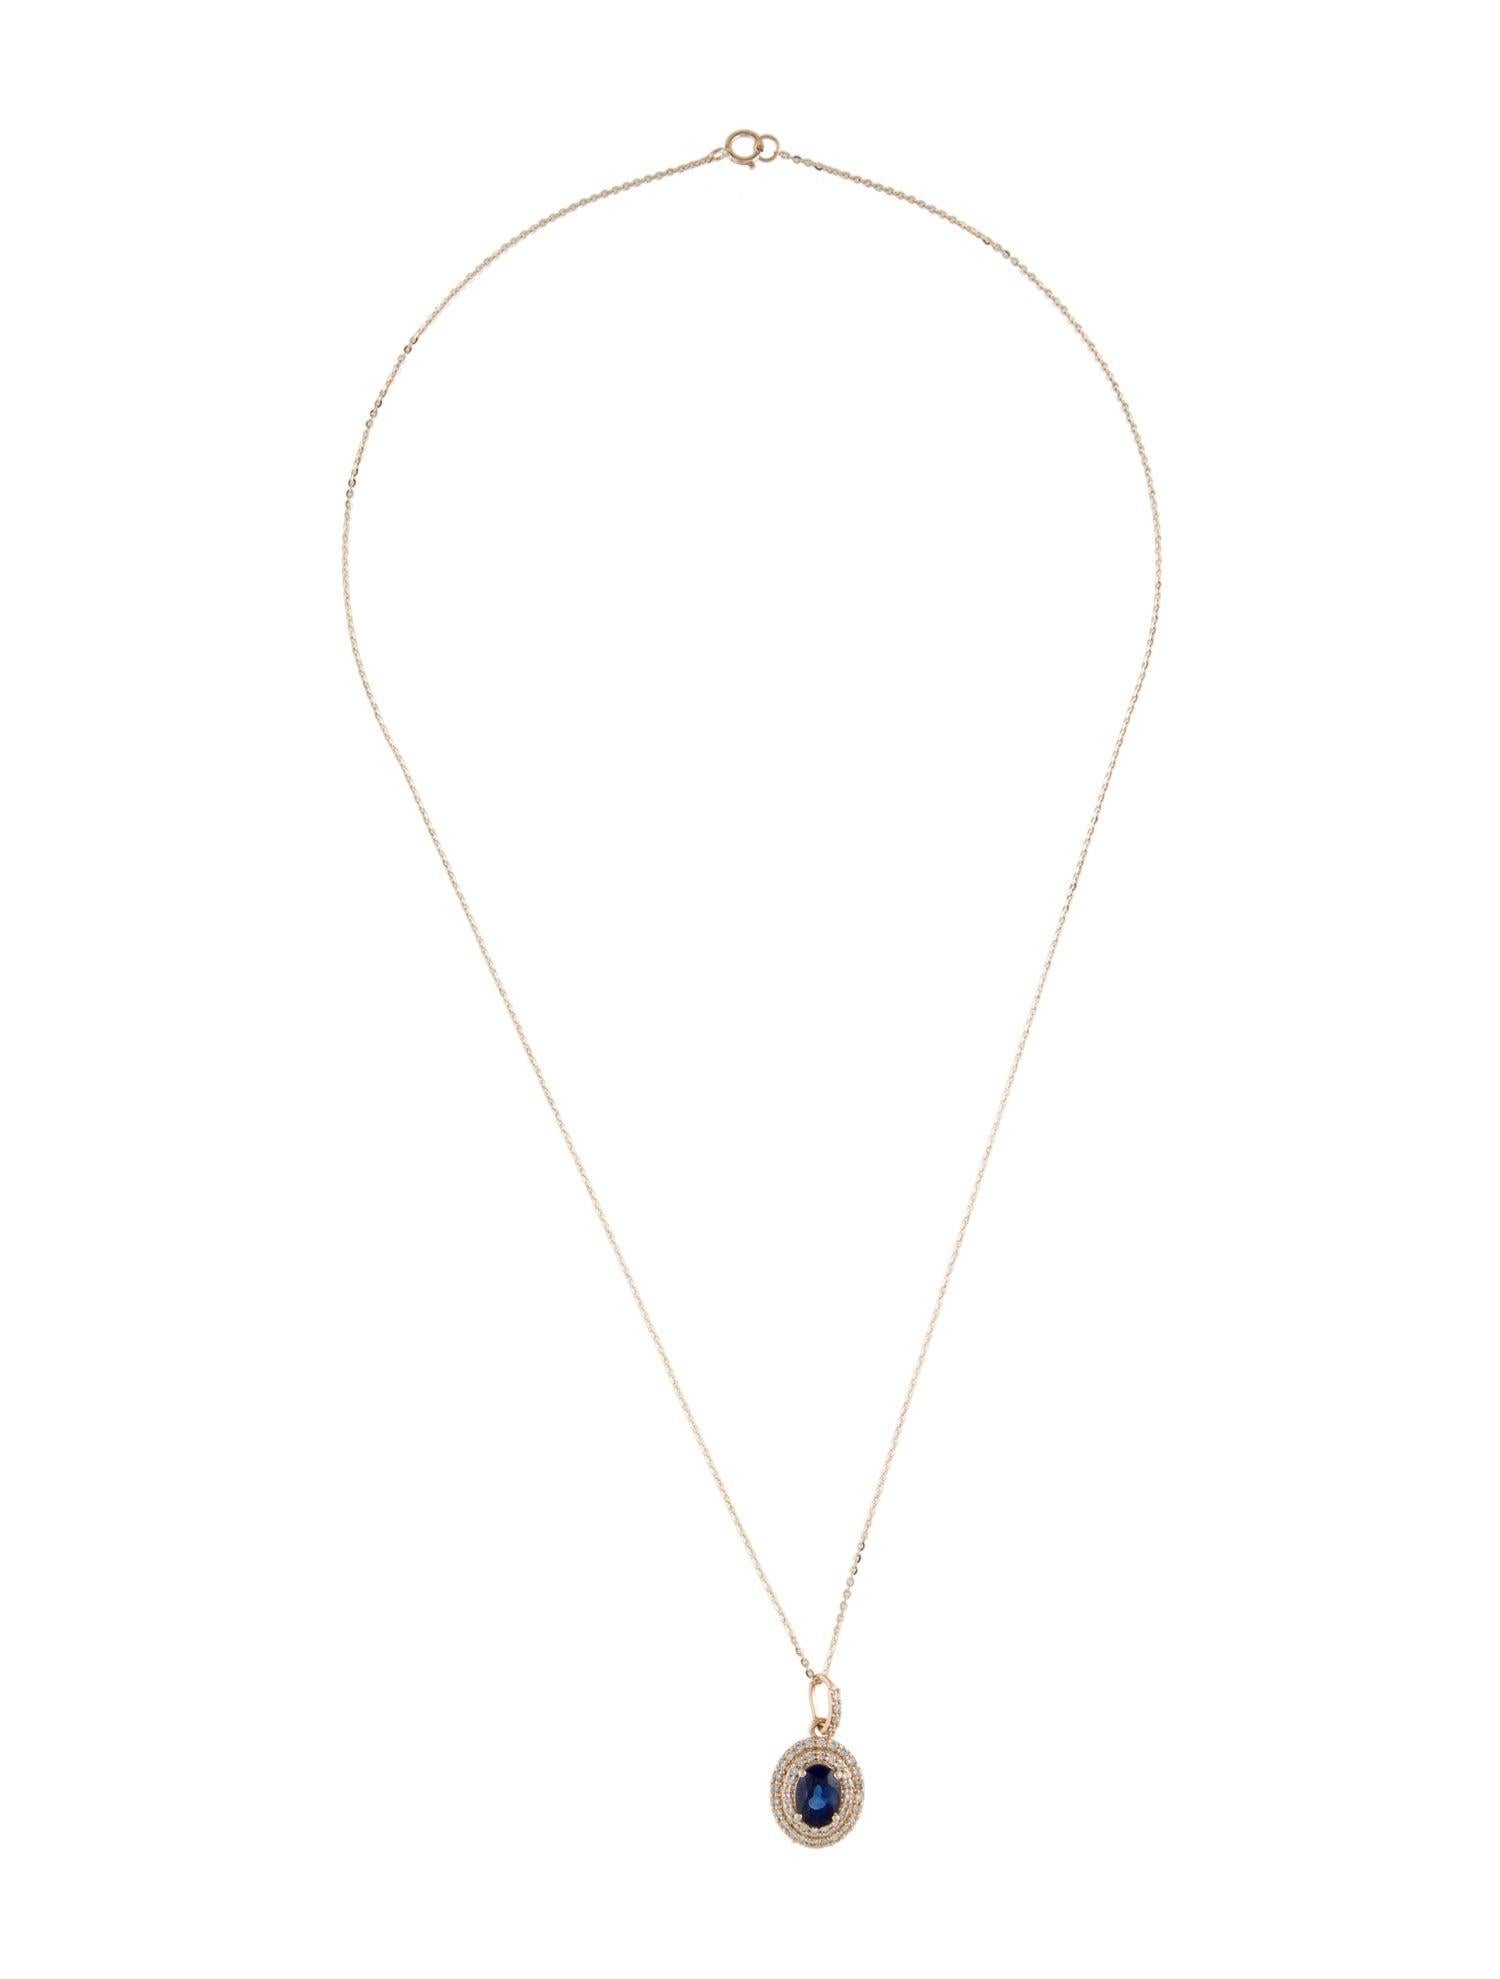 Brilliant Cut 14K 1.43ct Sapphire & Diamond Pendant Necklace: Elegant Luxury Statement Jewelry For Sale